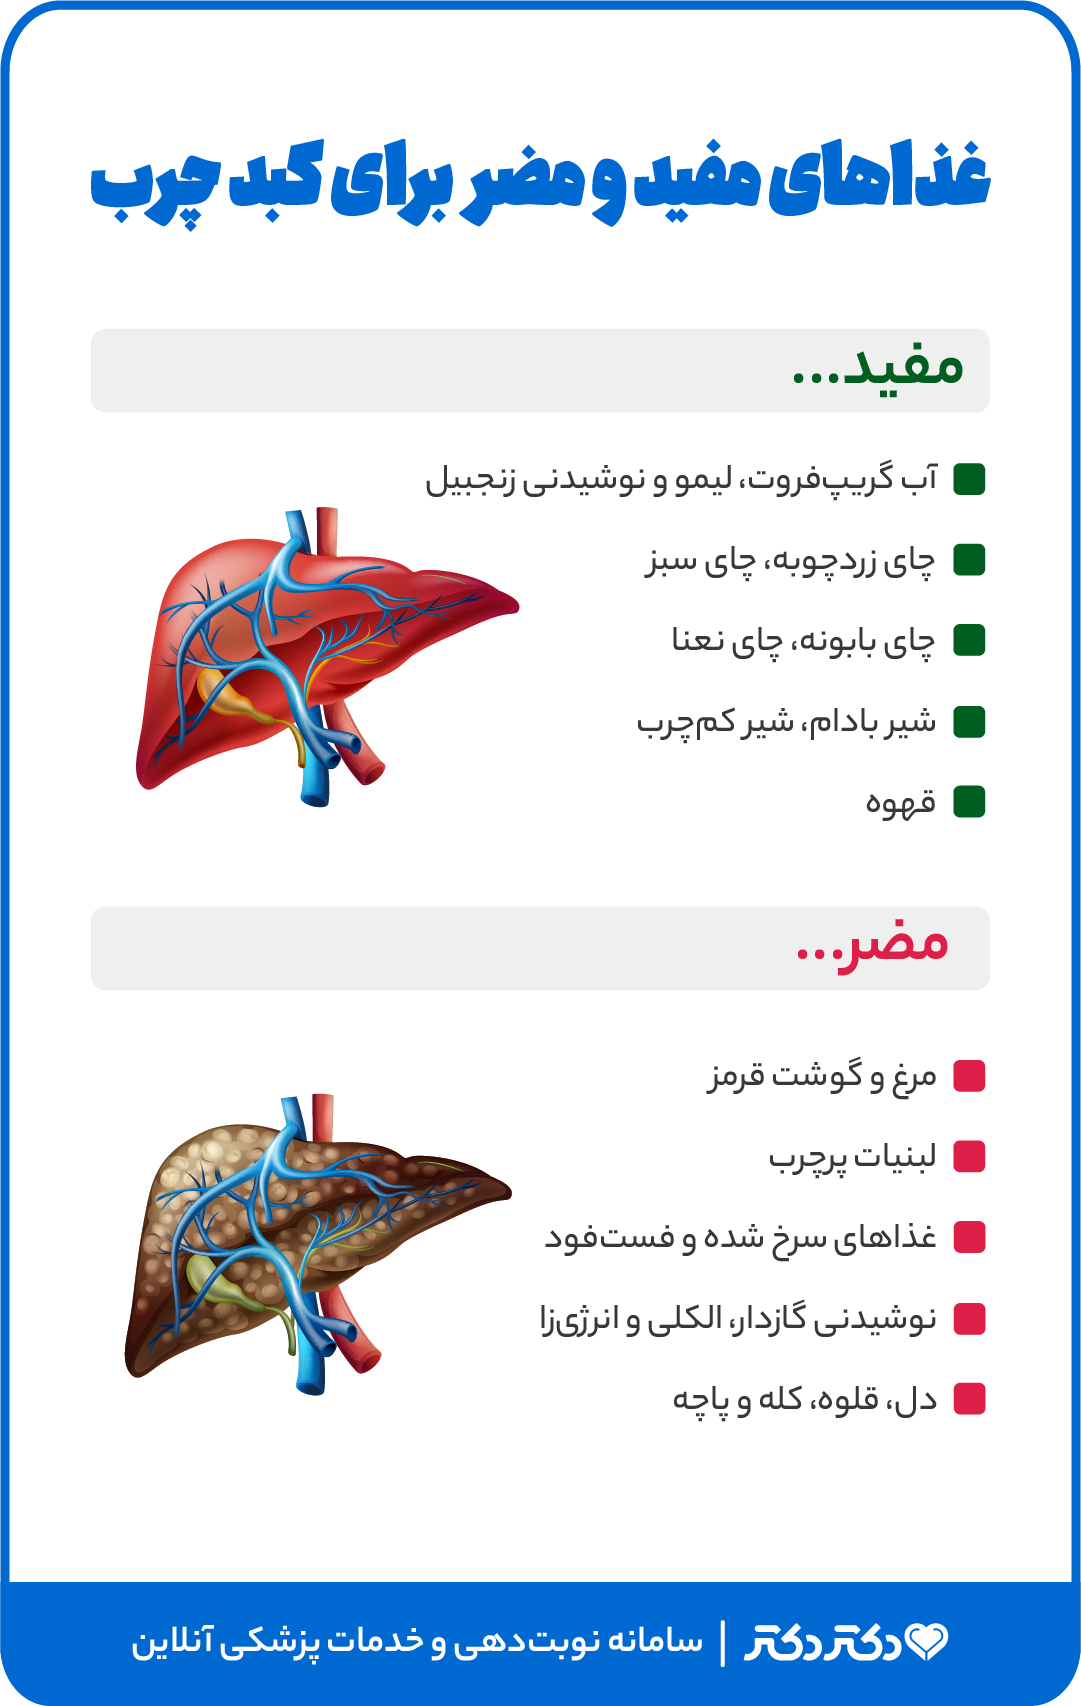 Fatty liver diet infographic